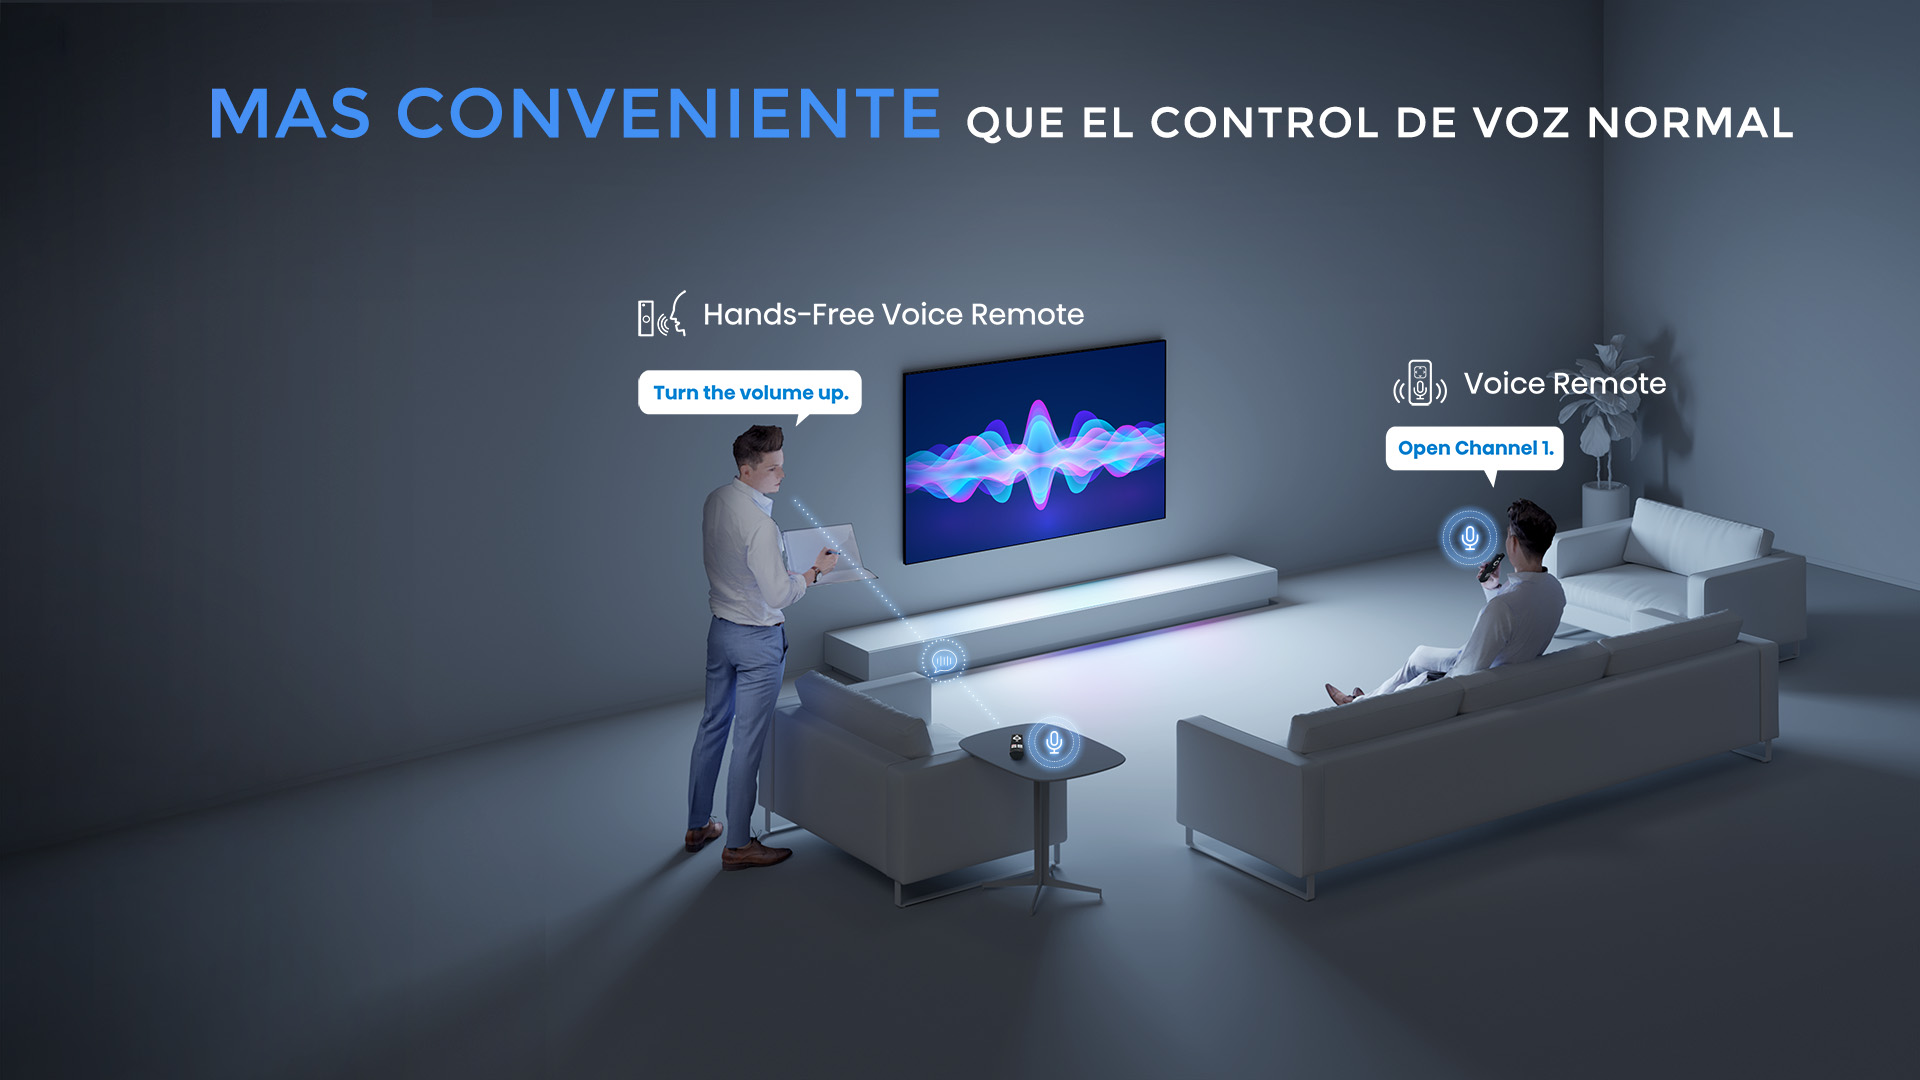 OLED 4K Smart TV 65A85H - Hisense España